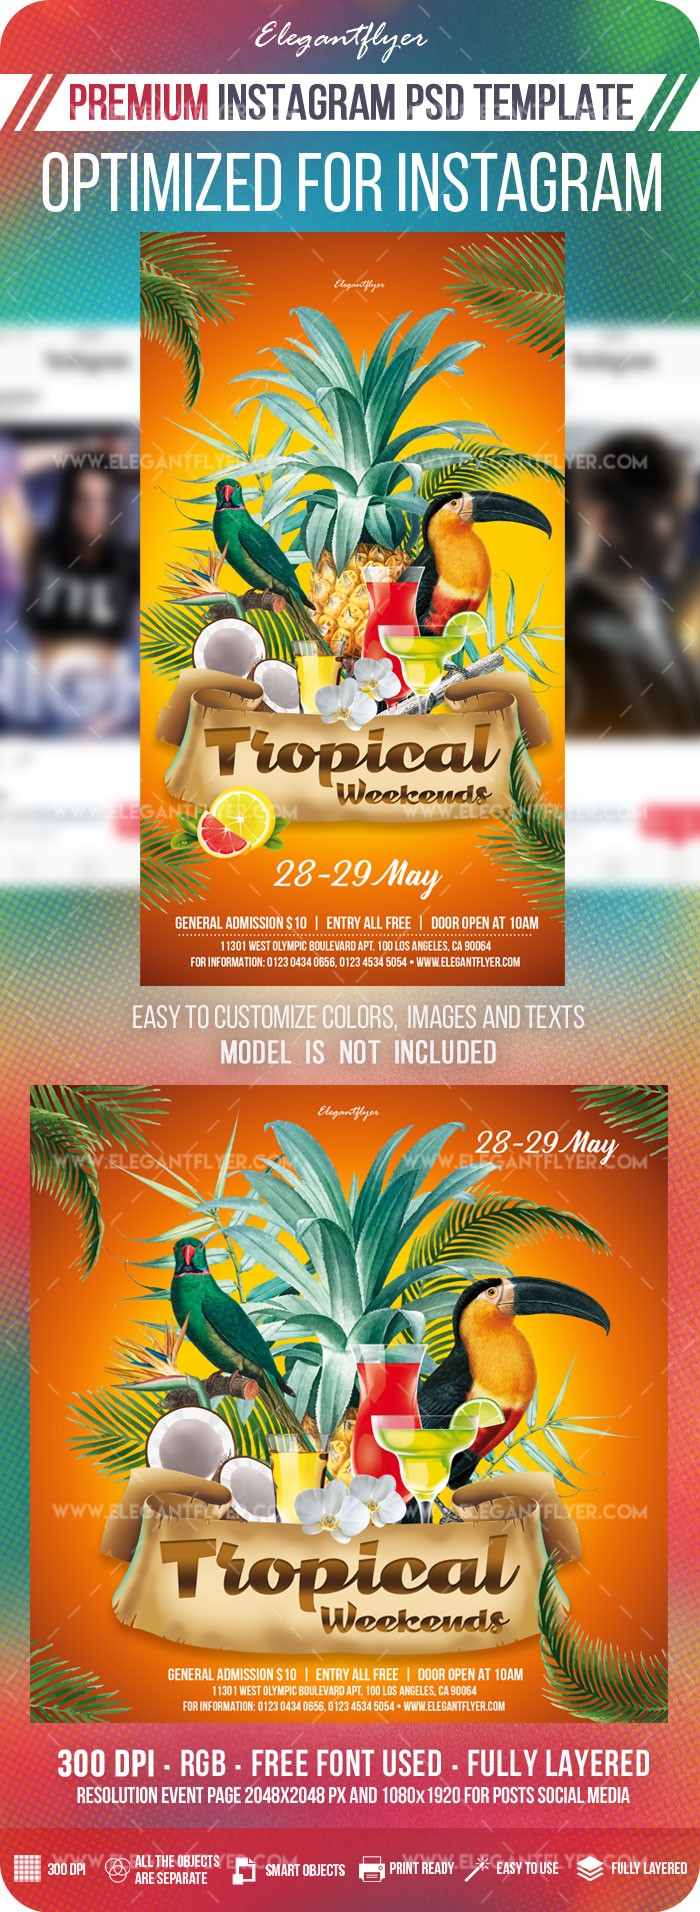 Tropical Weekends Instagram -> Instagram dei weekend tropicali by ElegantFlyer